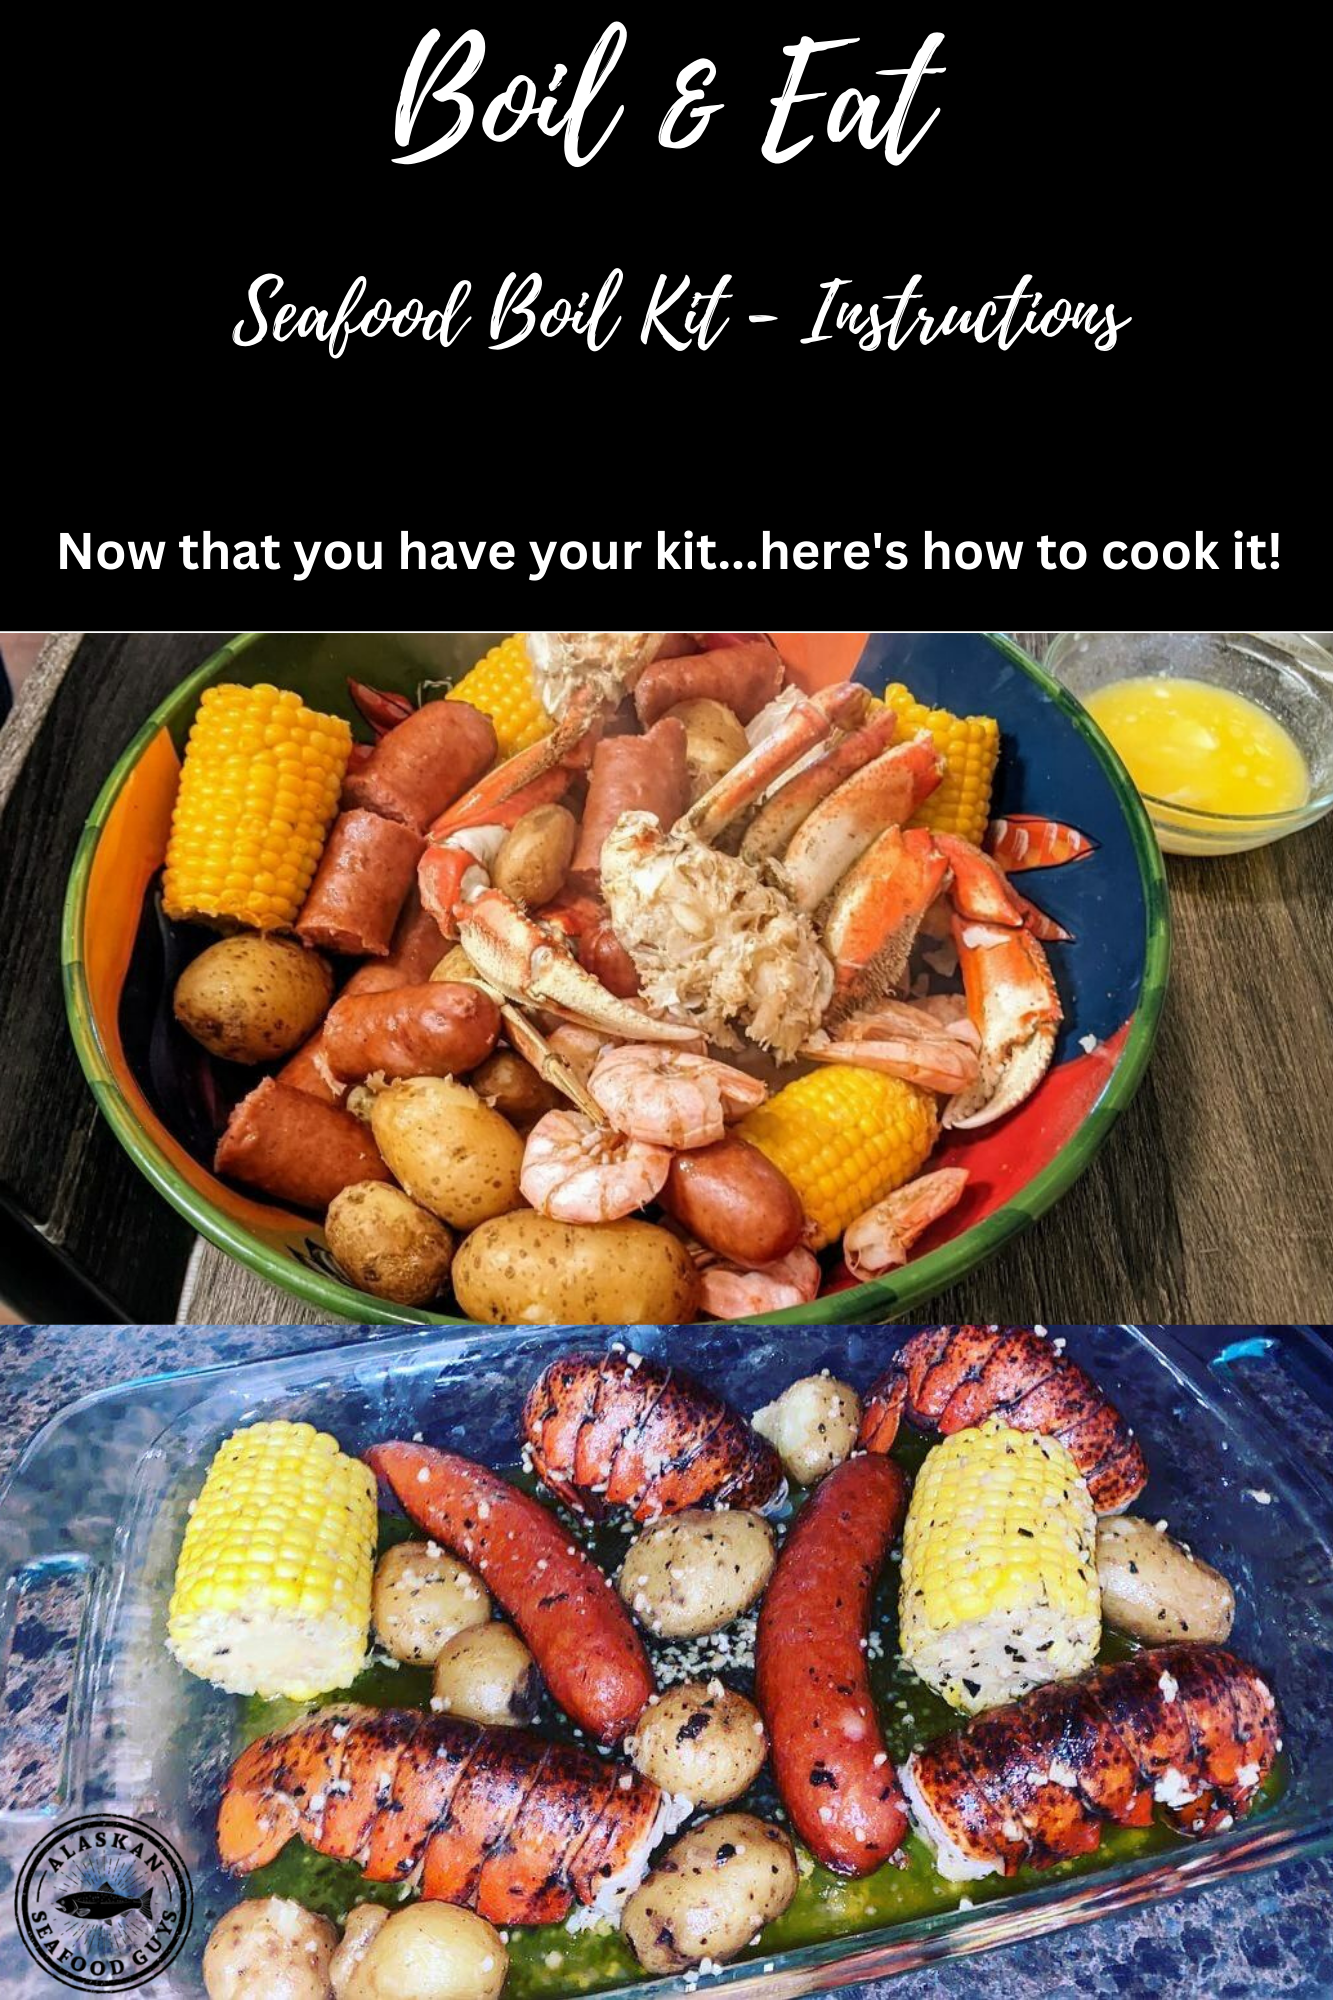 Rock Your Boat - 5 Person Seafood Boil Kit (Crab & Shrimp)